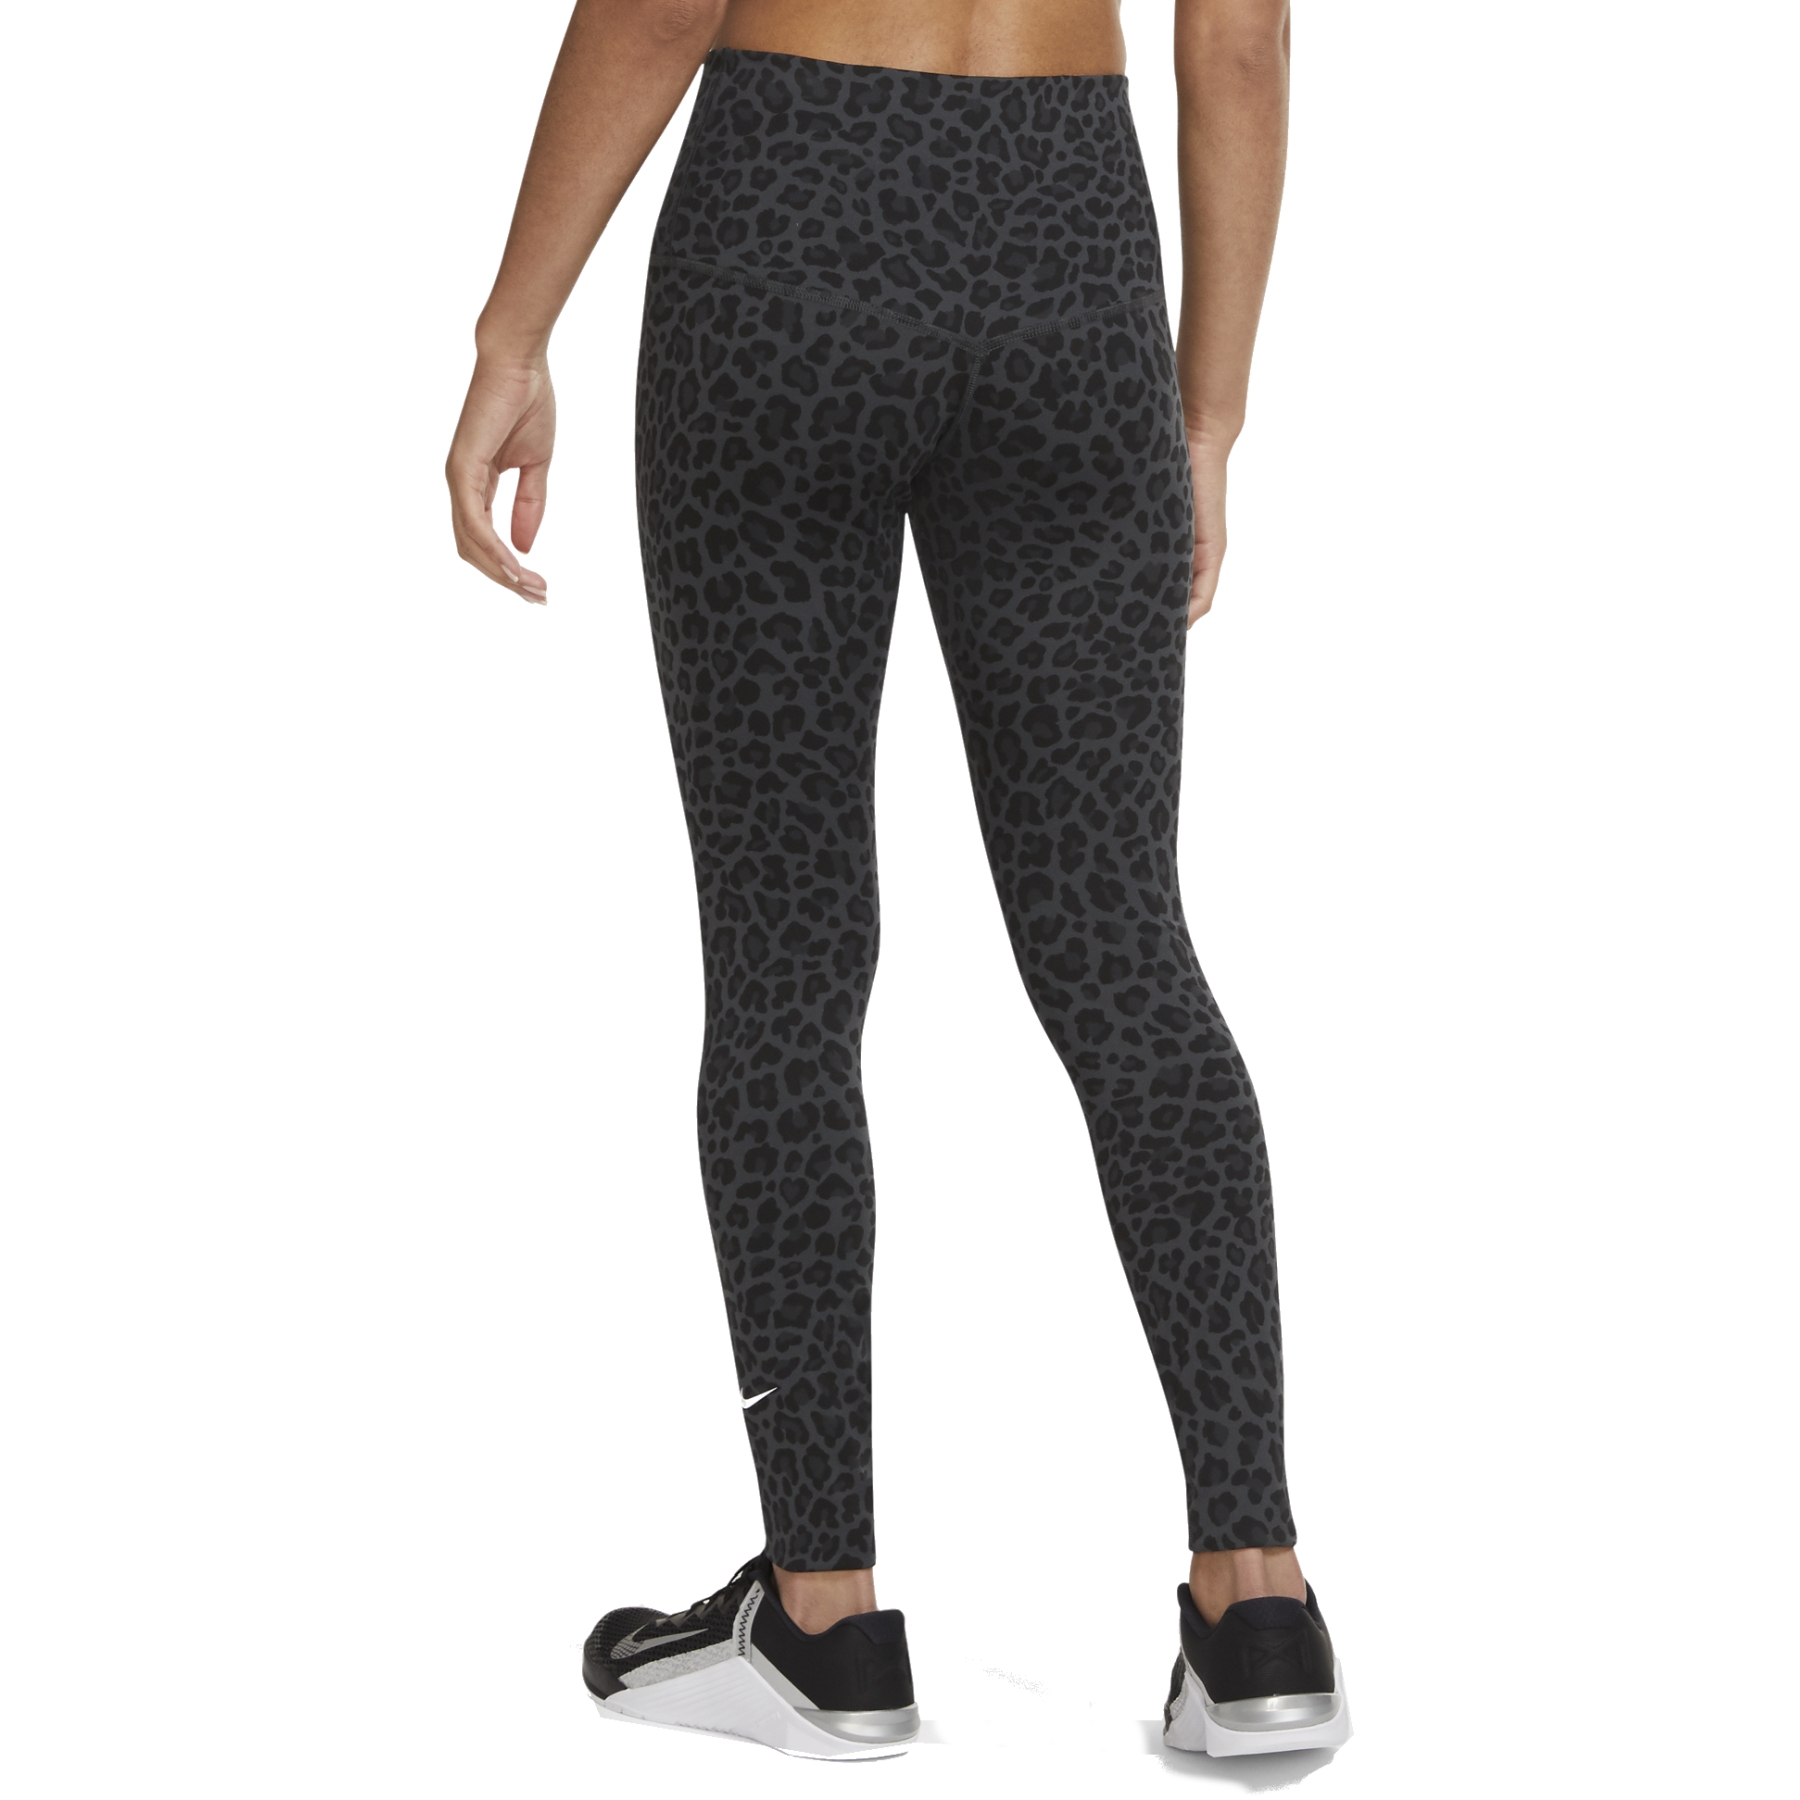 Women’s Nike One Dri-FIT high-rise leggings